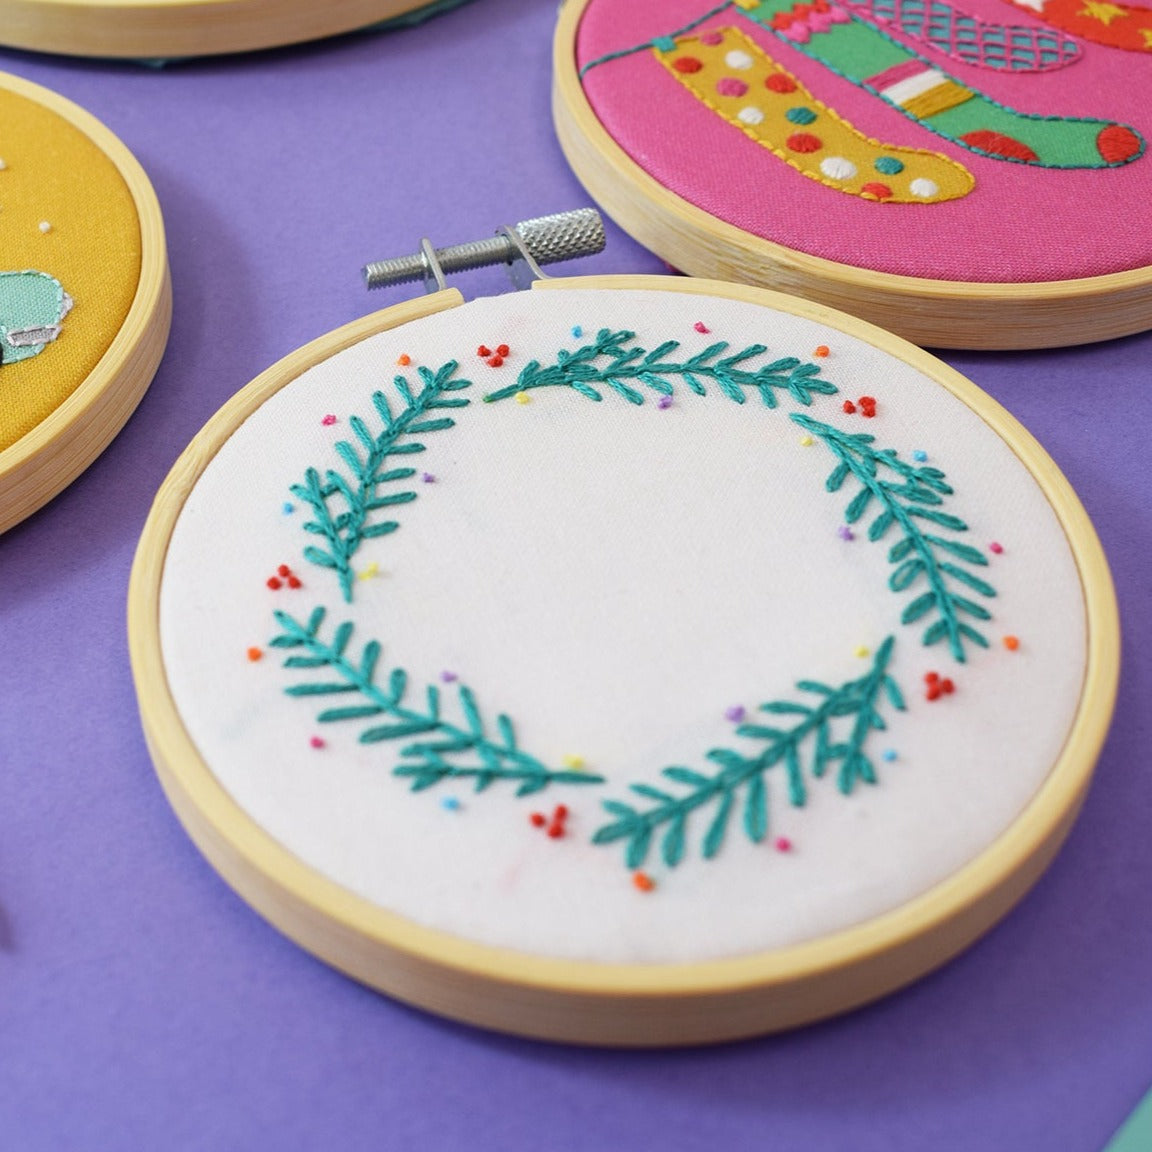 'Evergreen Wreath'  Mini Embroidery Kit